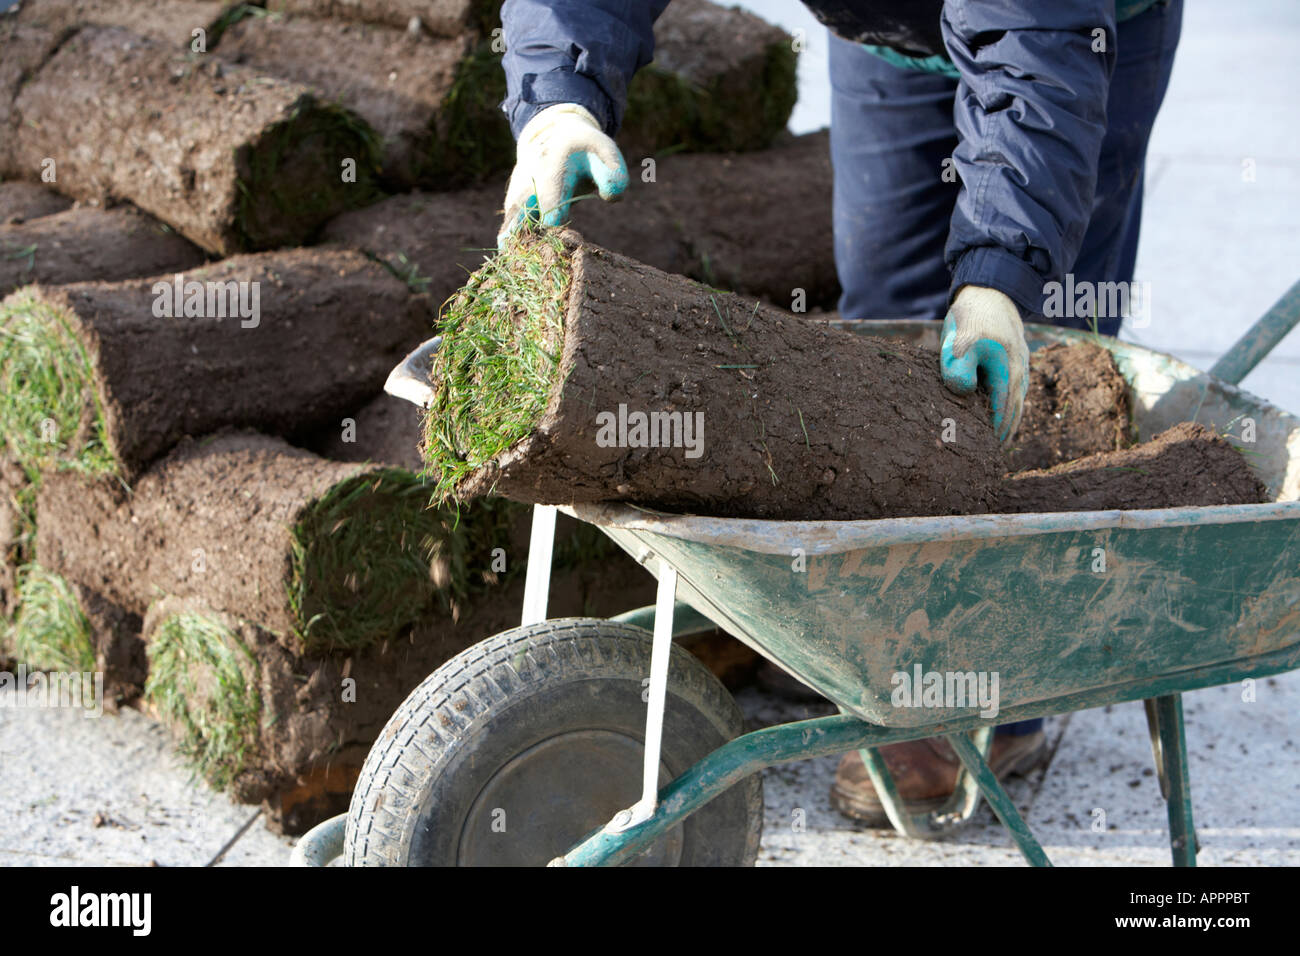 gardener loading rolls of turf grass from a pallet onto a wheelbarrow Belfast Northern Ireland UK Stock Photo